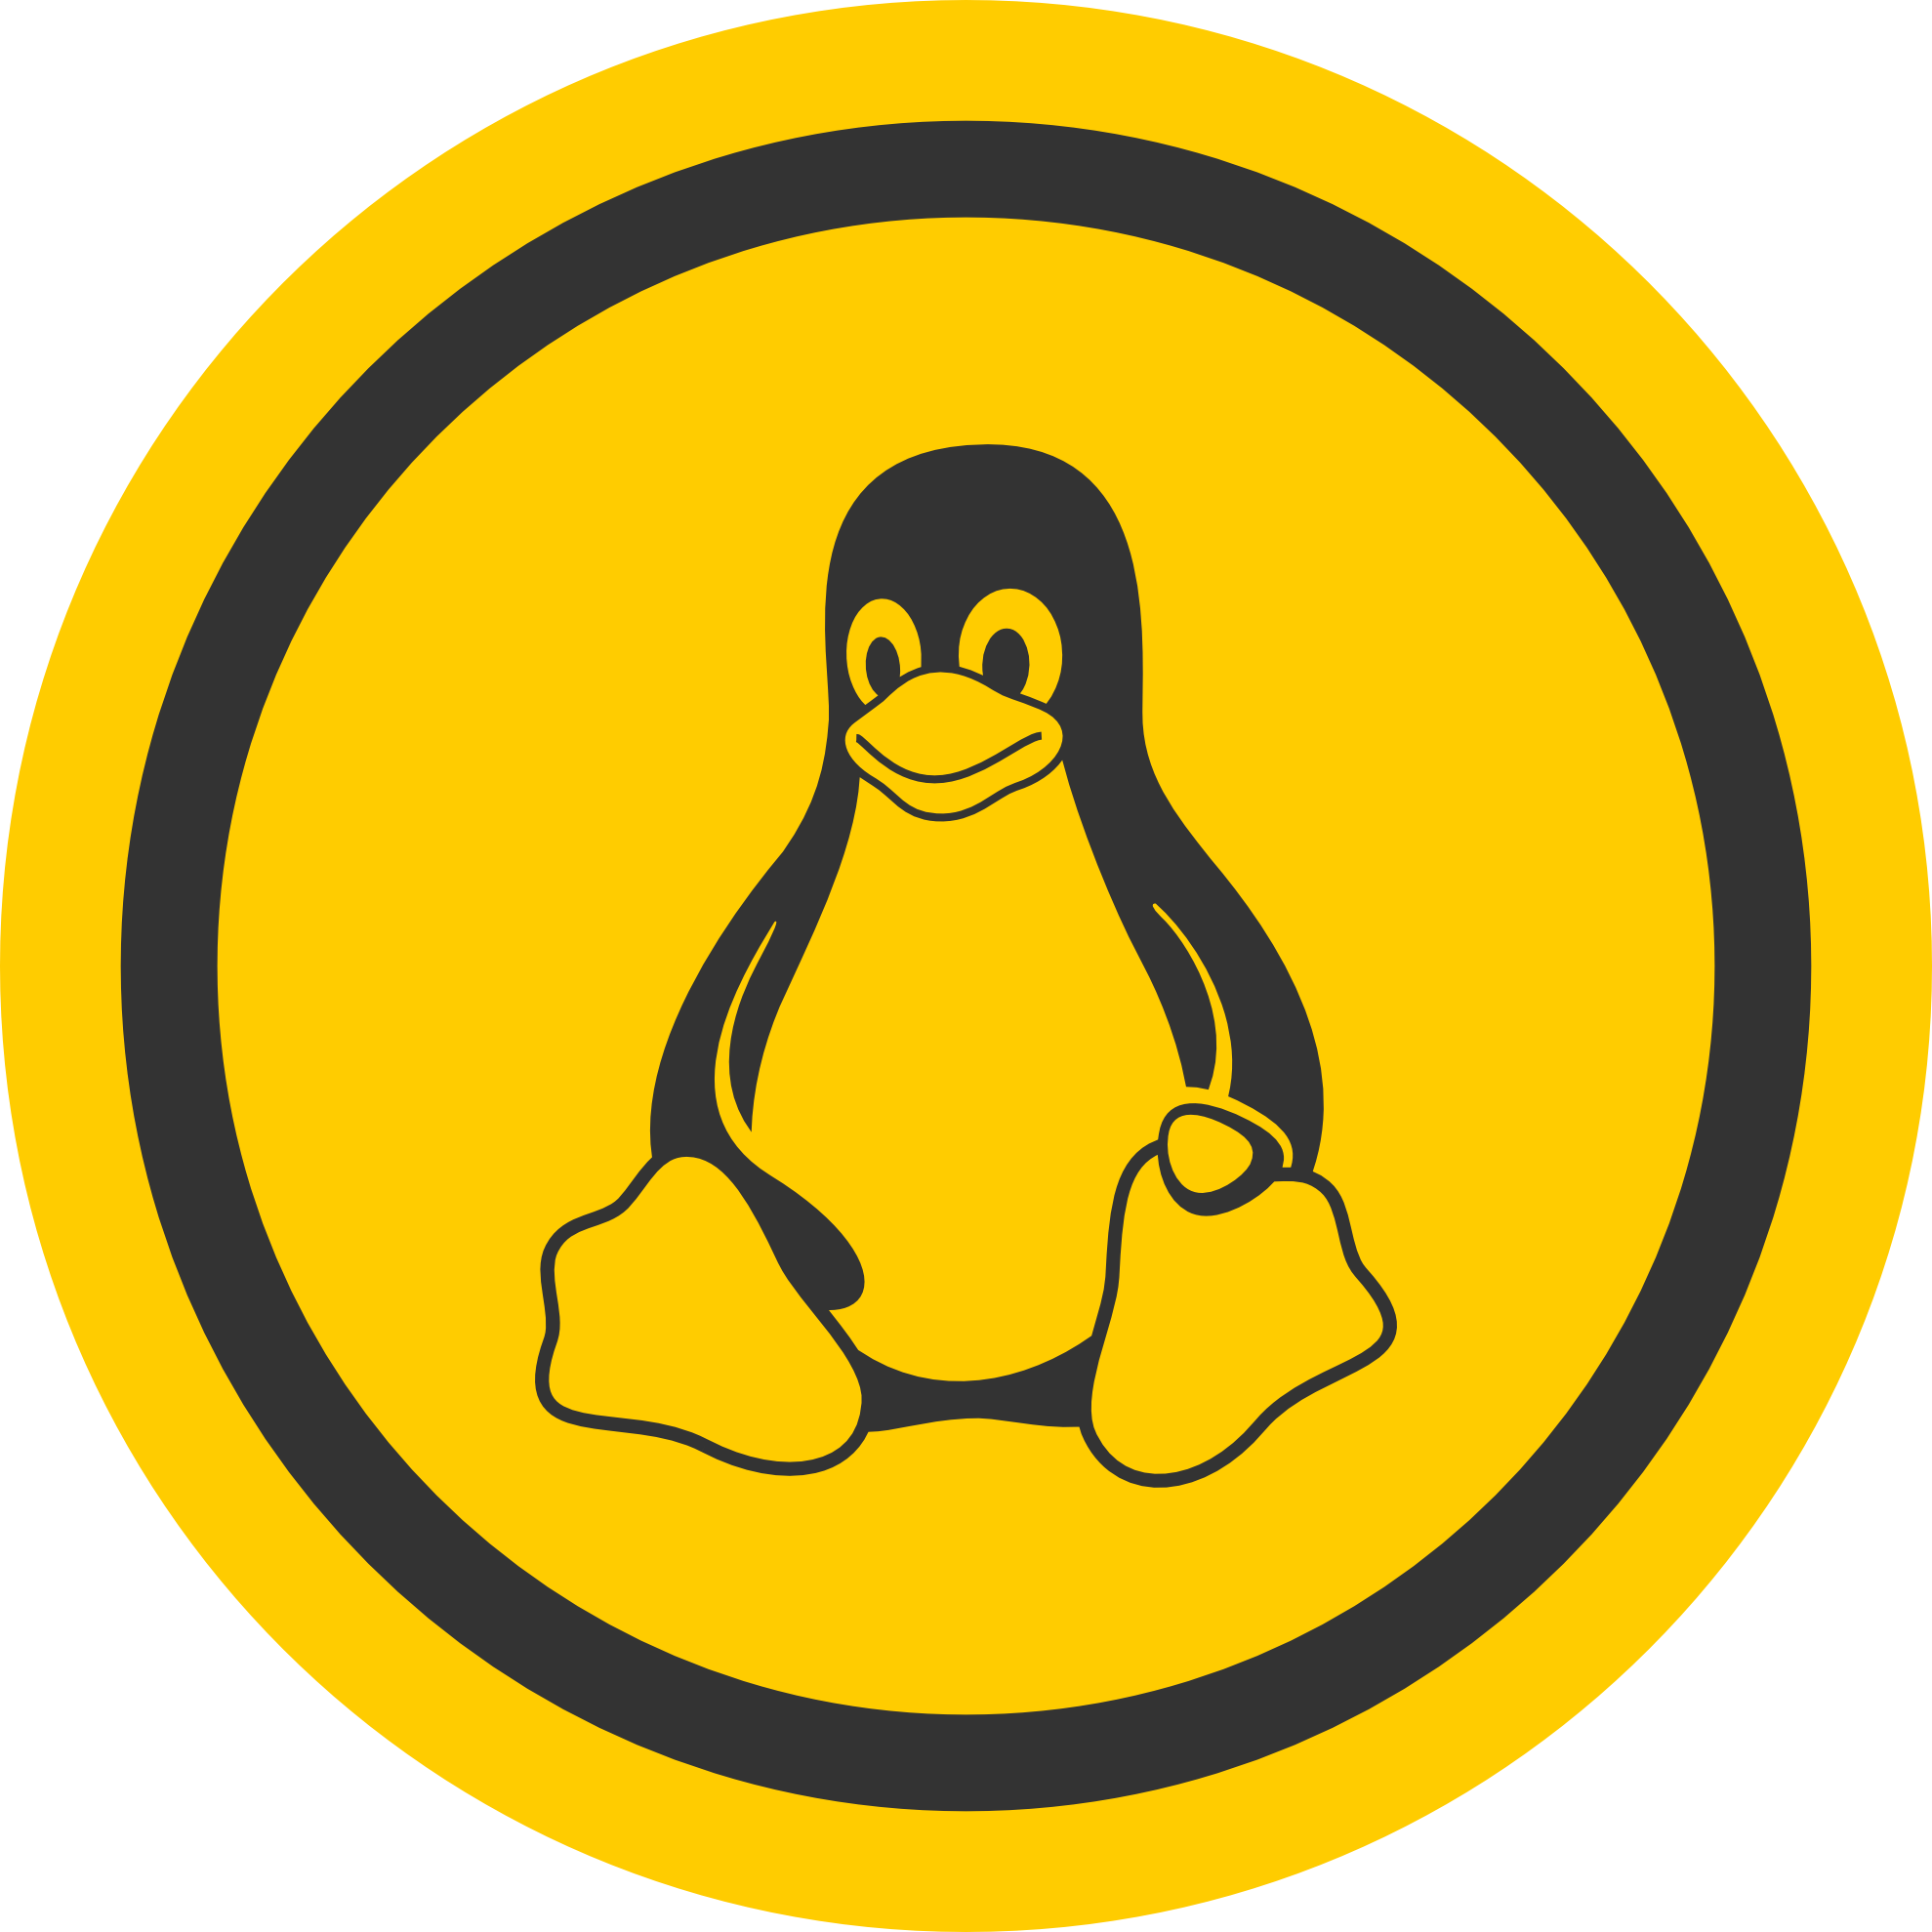 Tux Logo - Download Free Tux Logo Operating System Linux Free Download Image ...